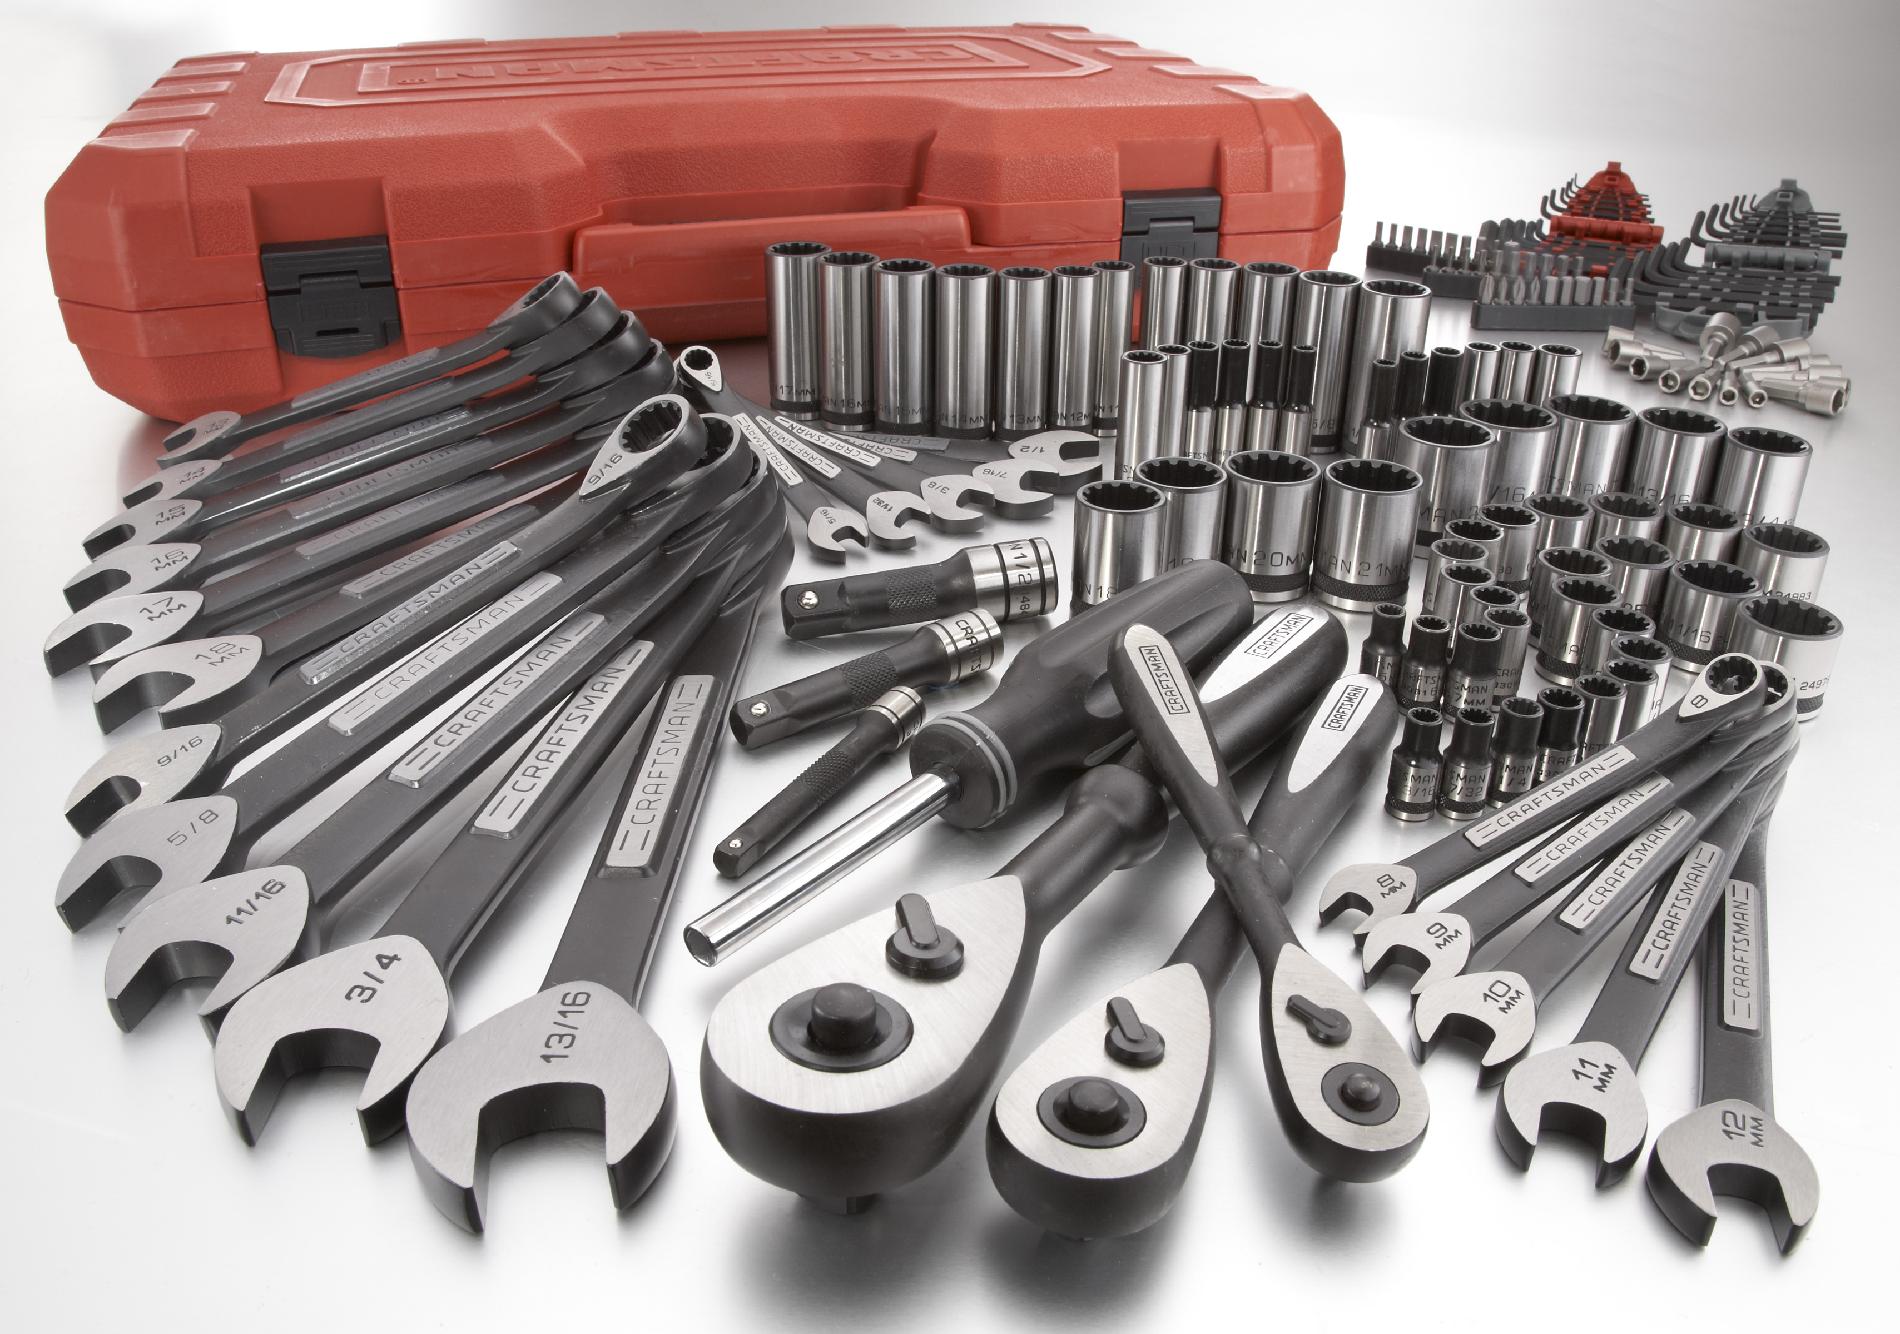 Craftsman 153pc. Universal Mechanic's Tool Set | Shop Your Way: Online